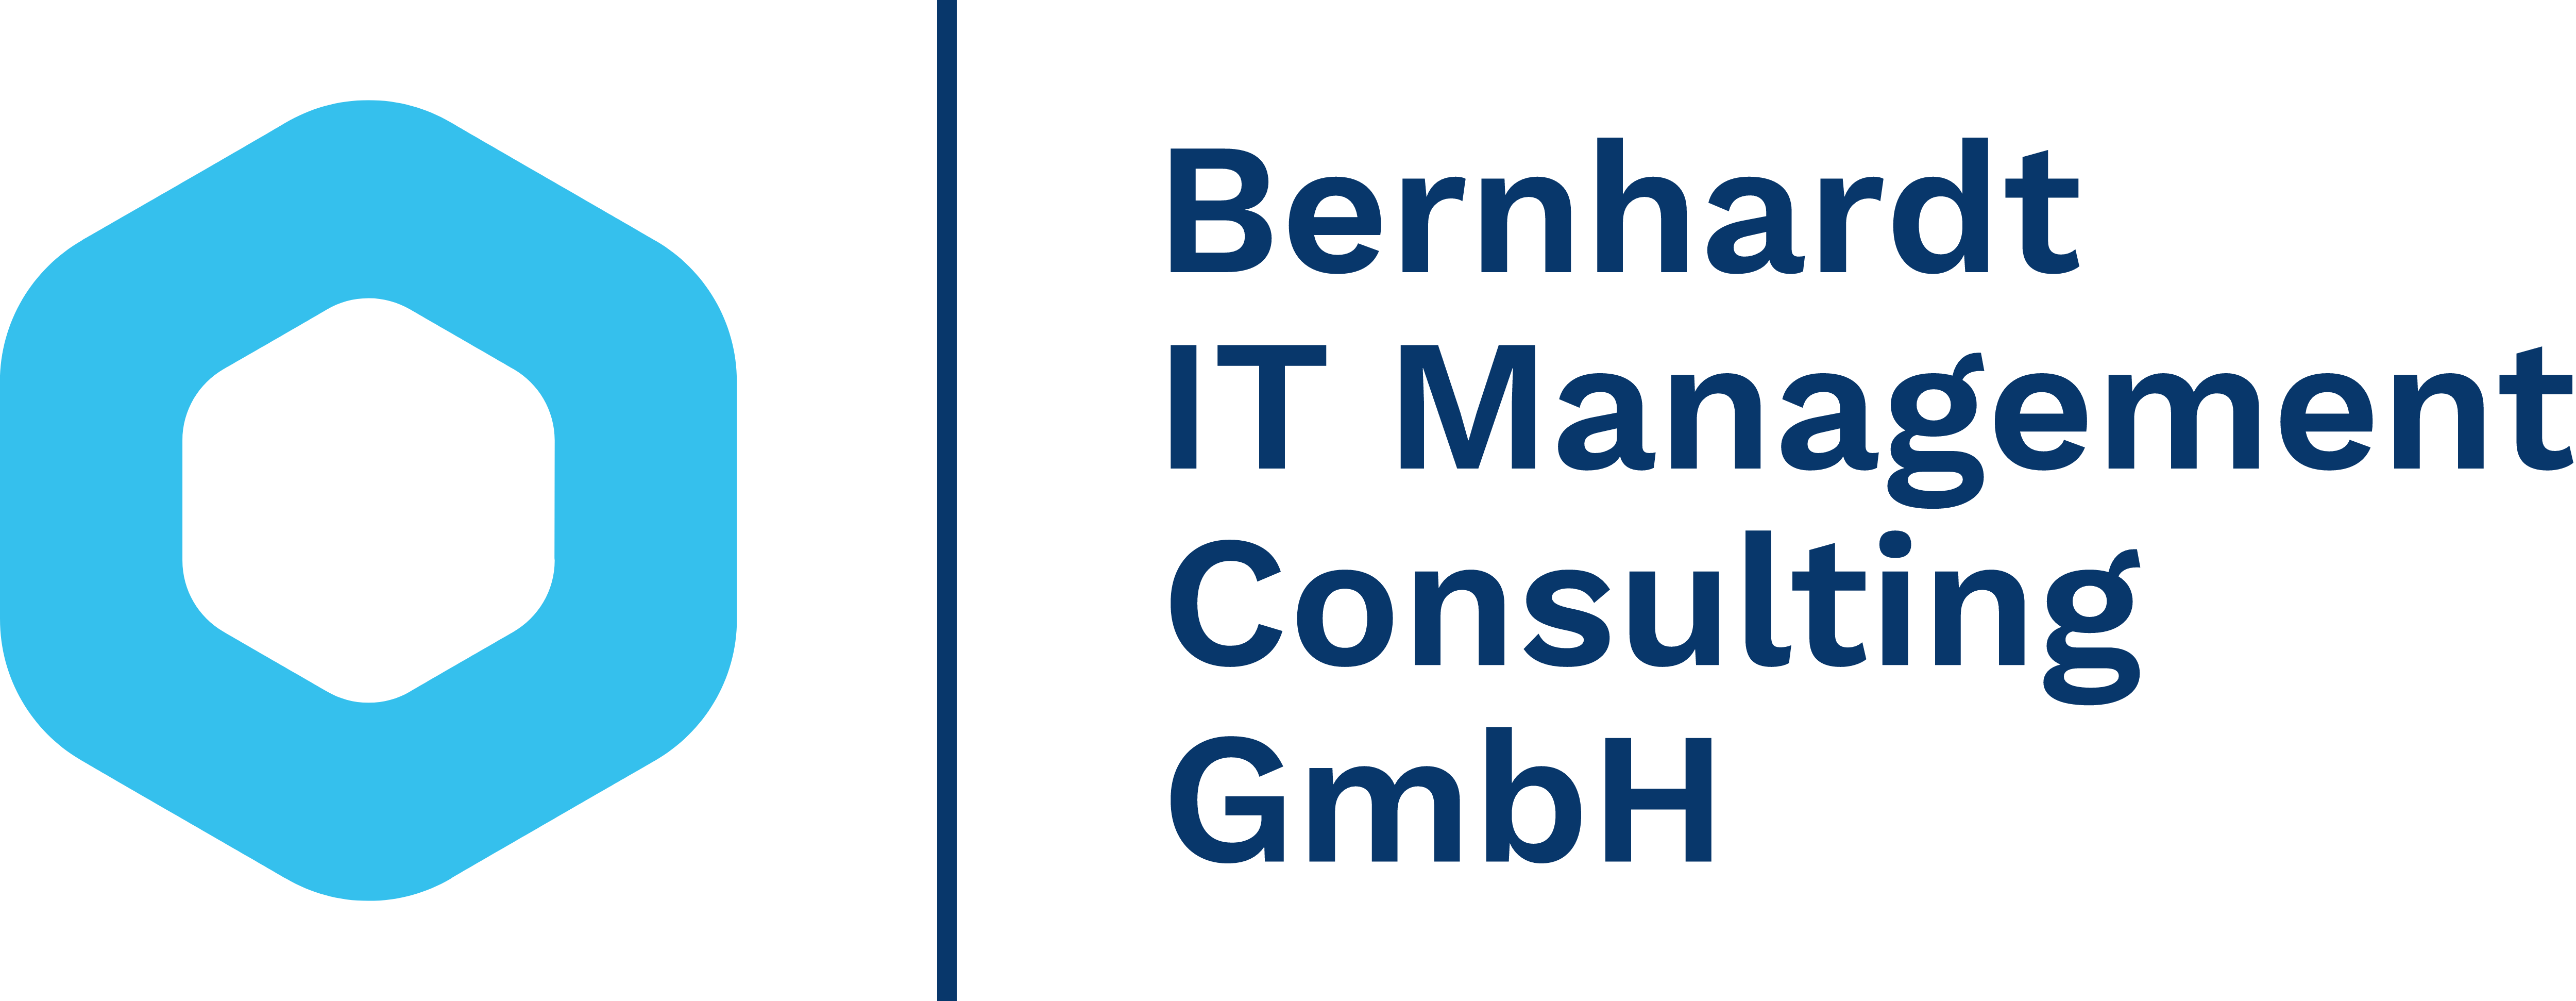 Bernhardt IT Management Consulting GmbH